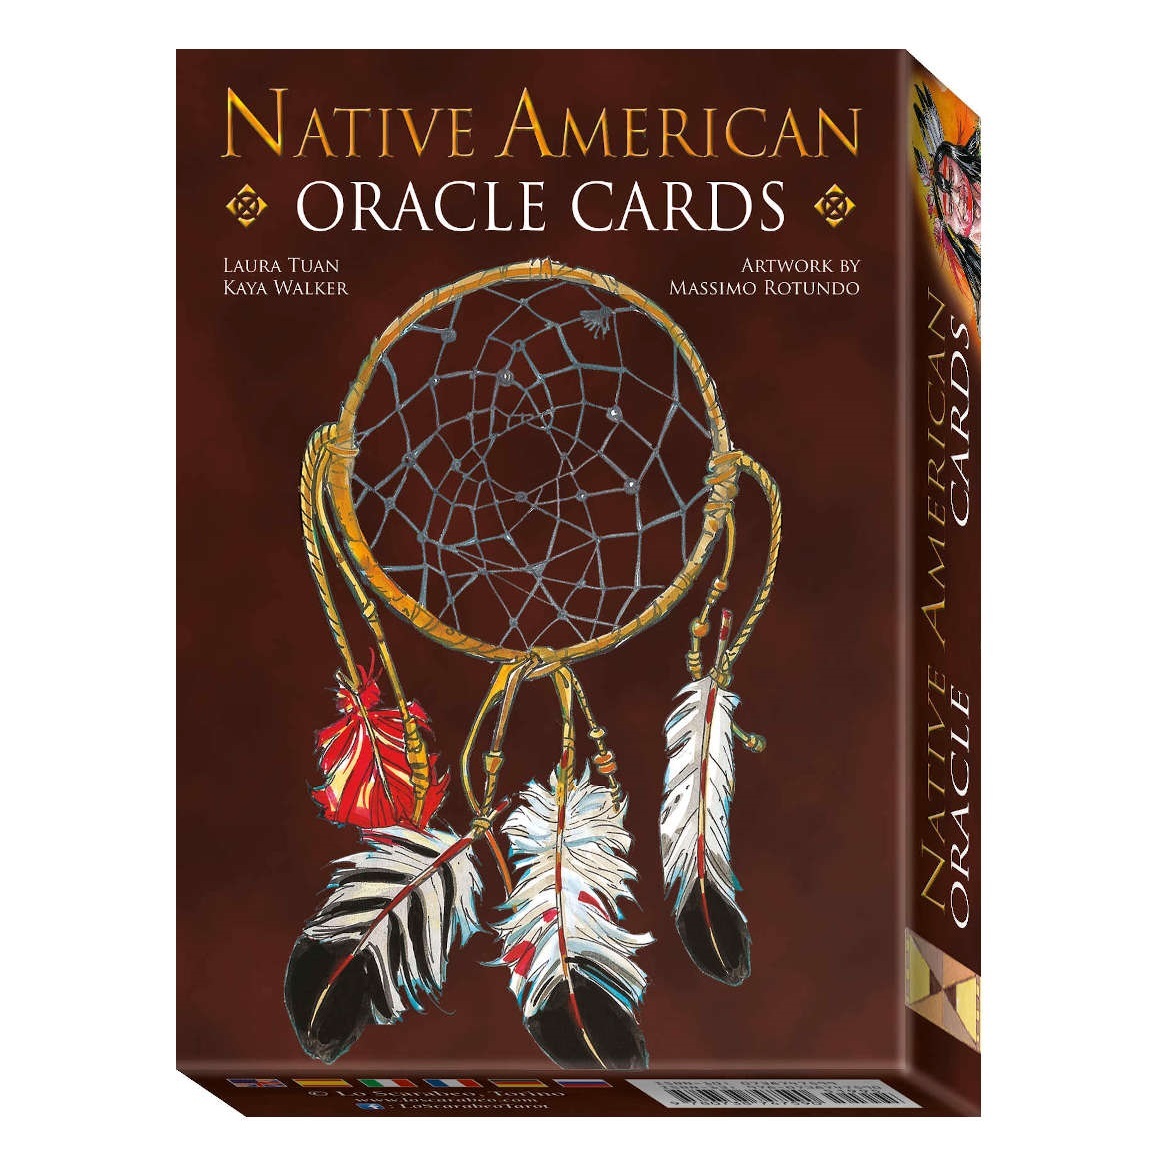 

Оракул Американских индейцев (Native American Oracle Cards)